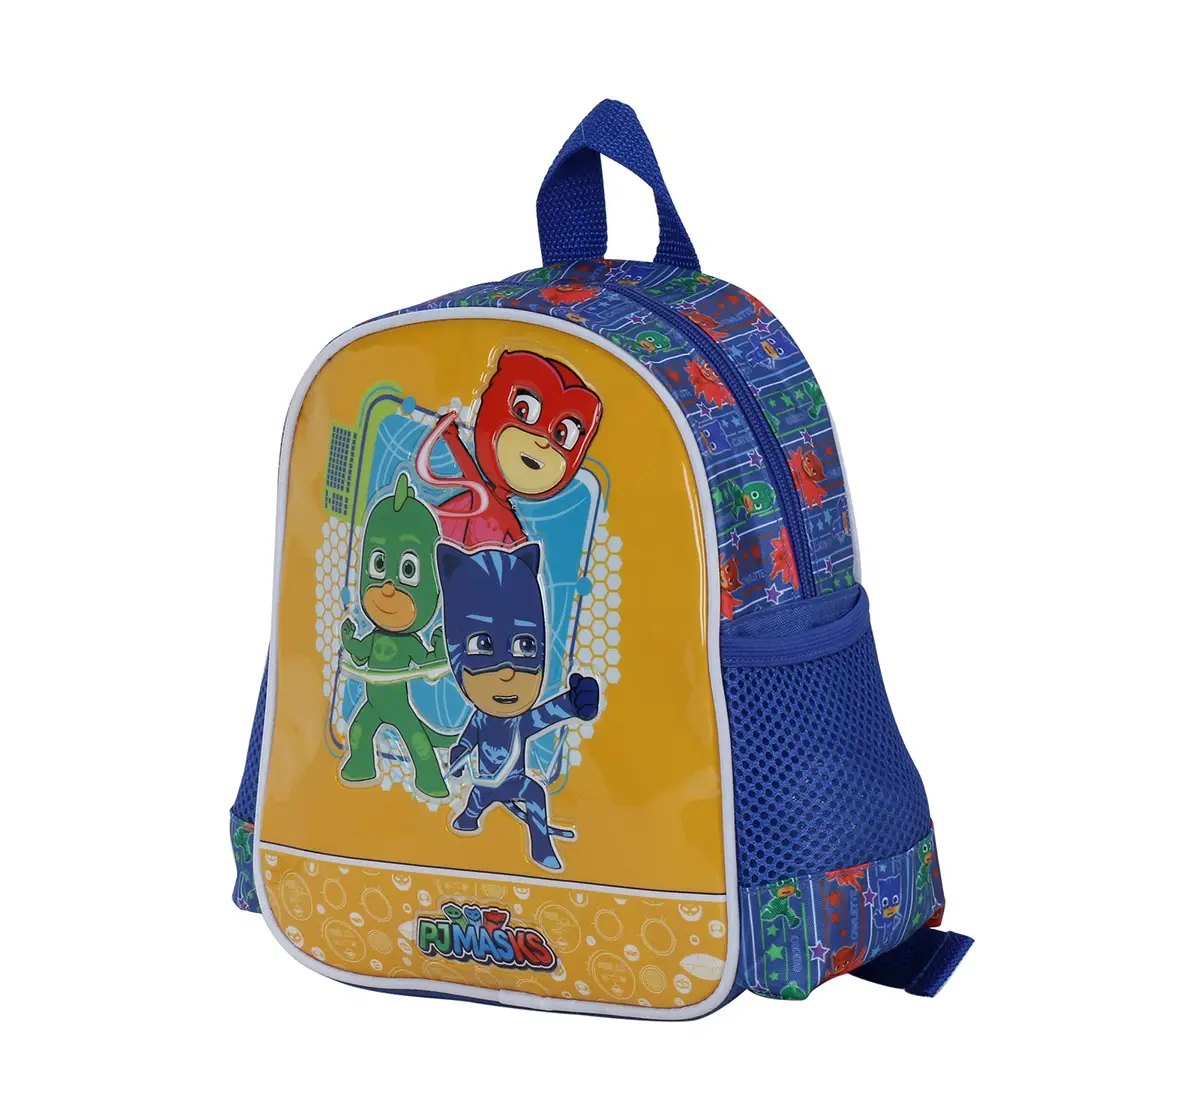 Pj Mask Task Force 10 Backpack Bags for Kids age 3Y+ 